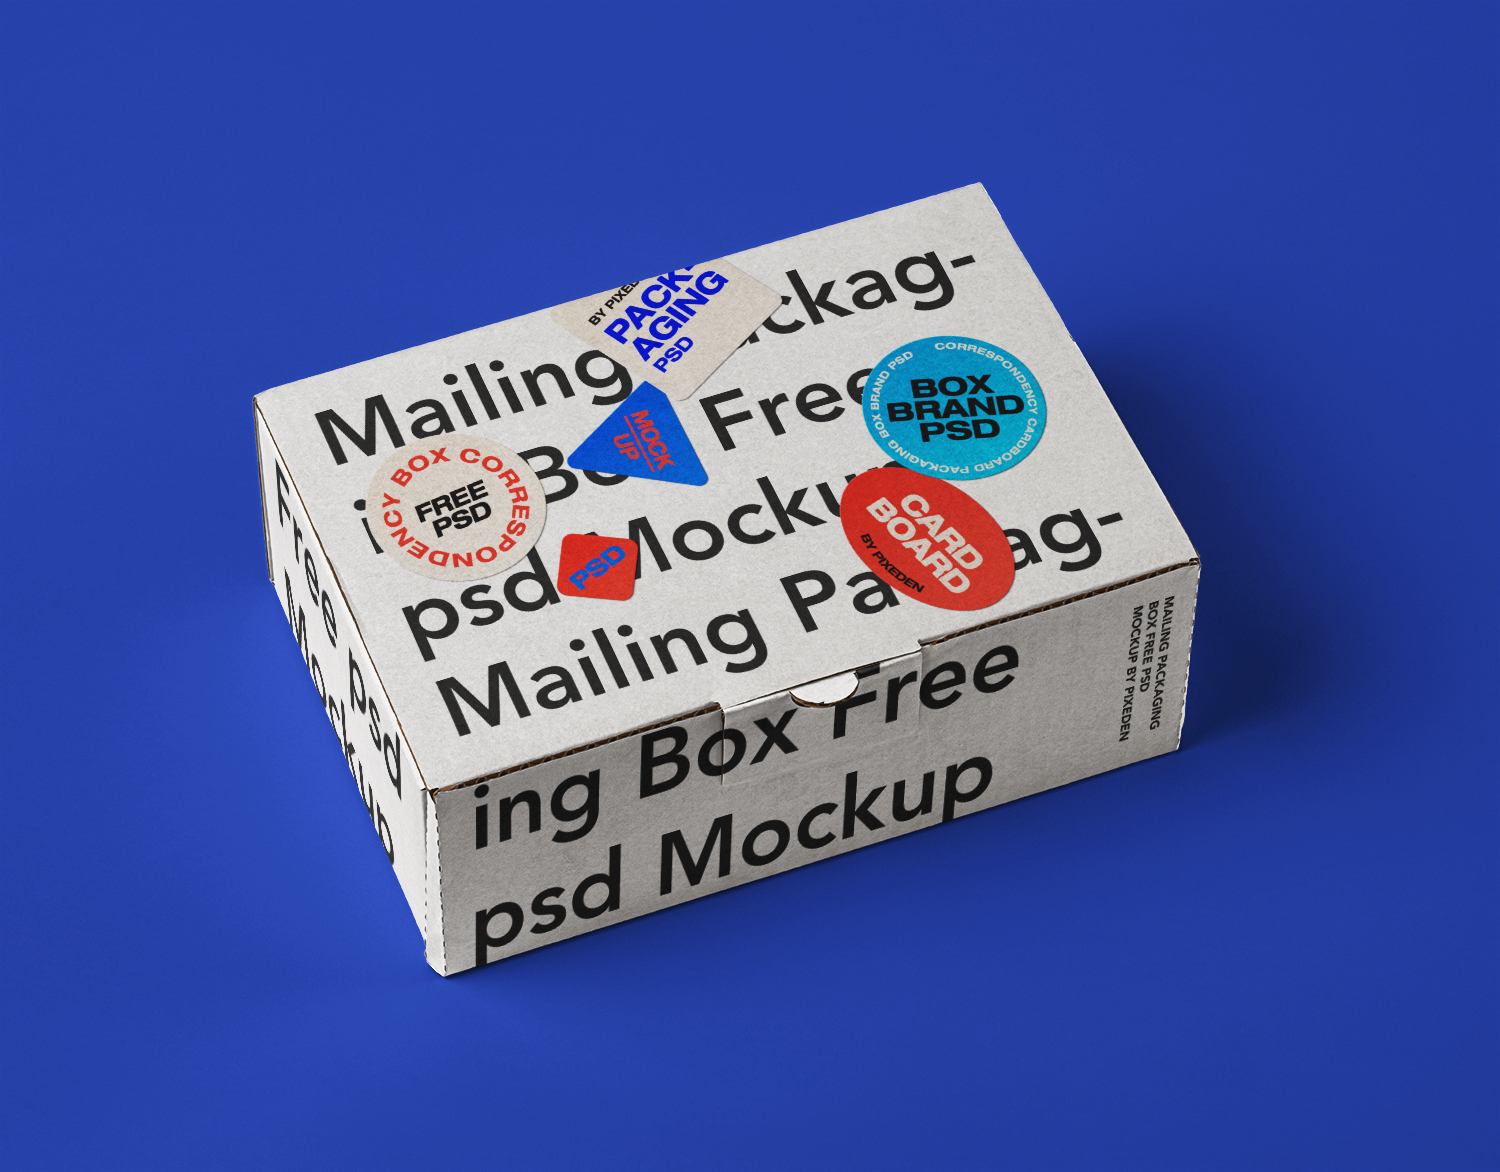 Mail Packaging Cardboard Box Free Mockup